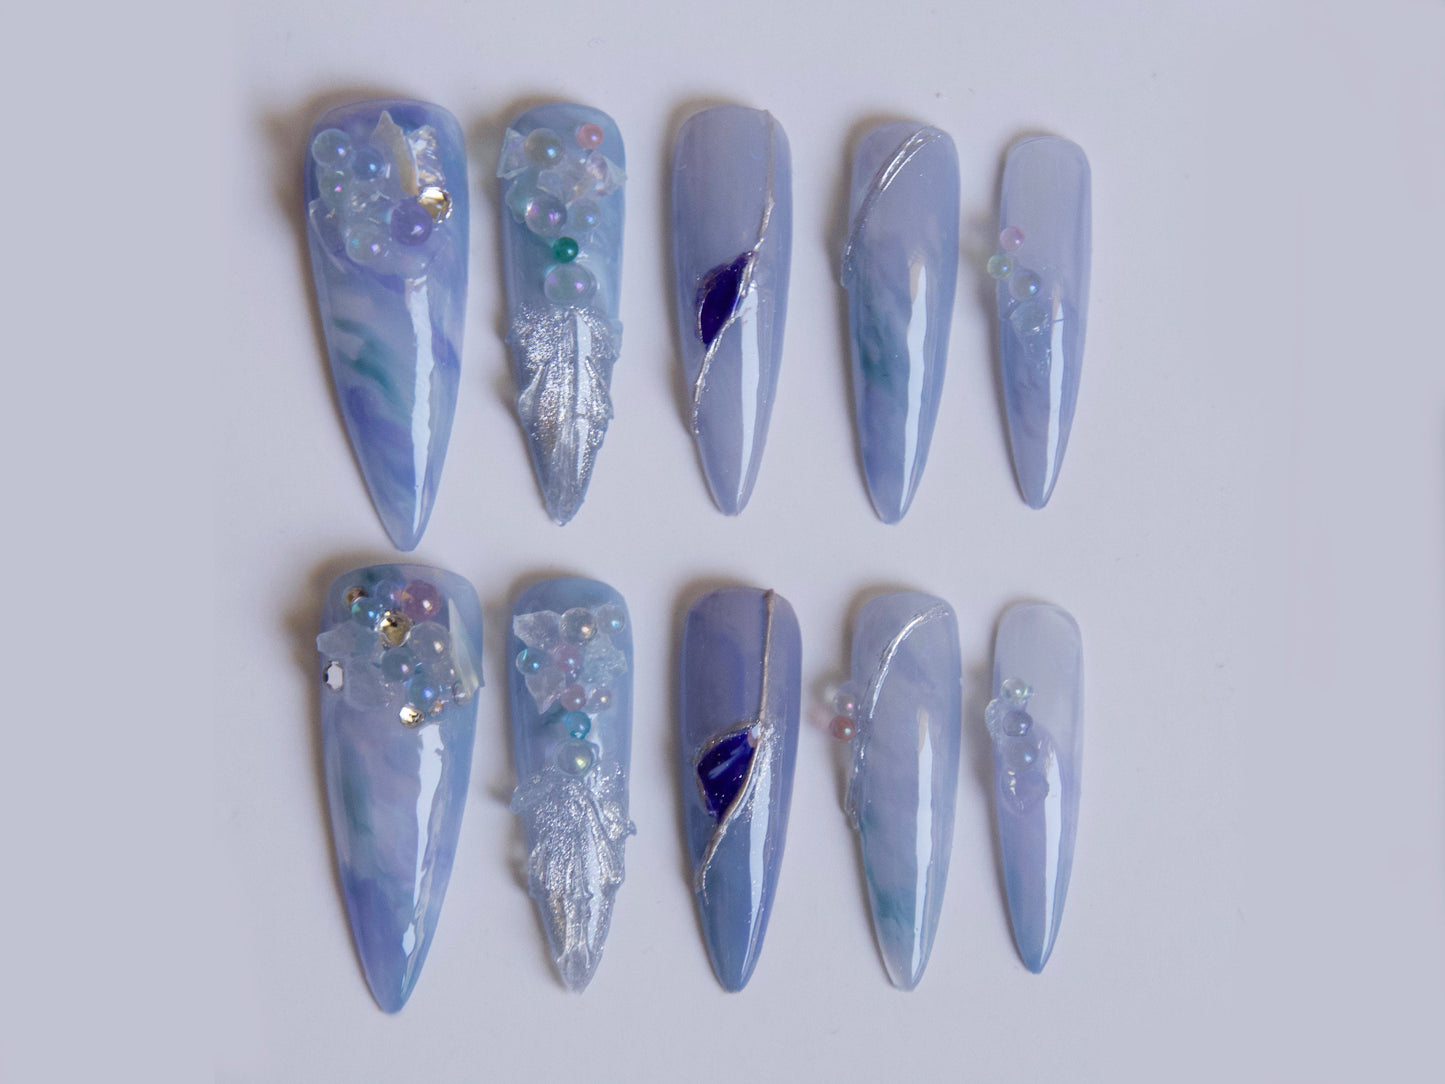 10g Broken Glass Irregular Stones for nail art/ Iridescent Clear Rocks/ Resin krafts Deco Embellishment Chips/ Vintage nail design